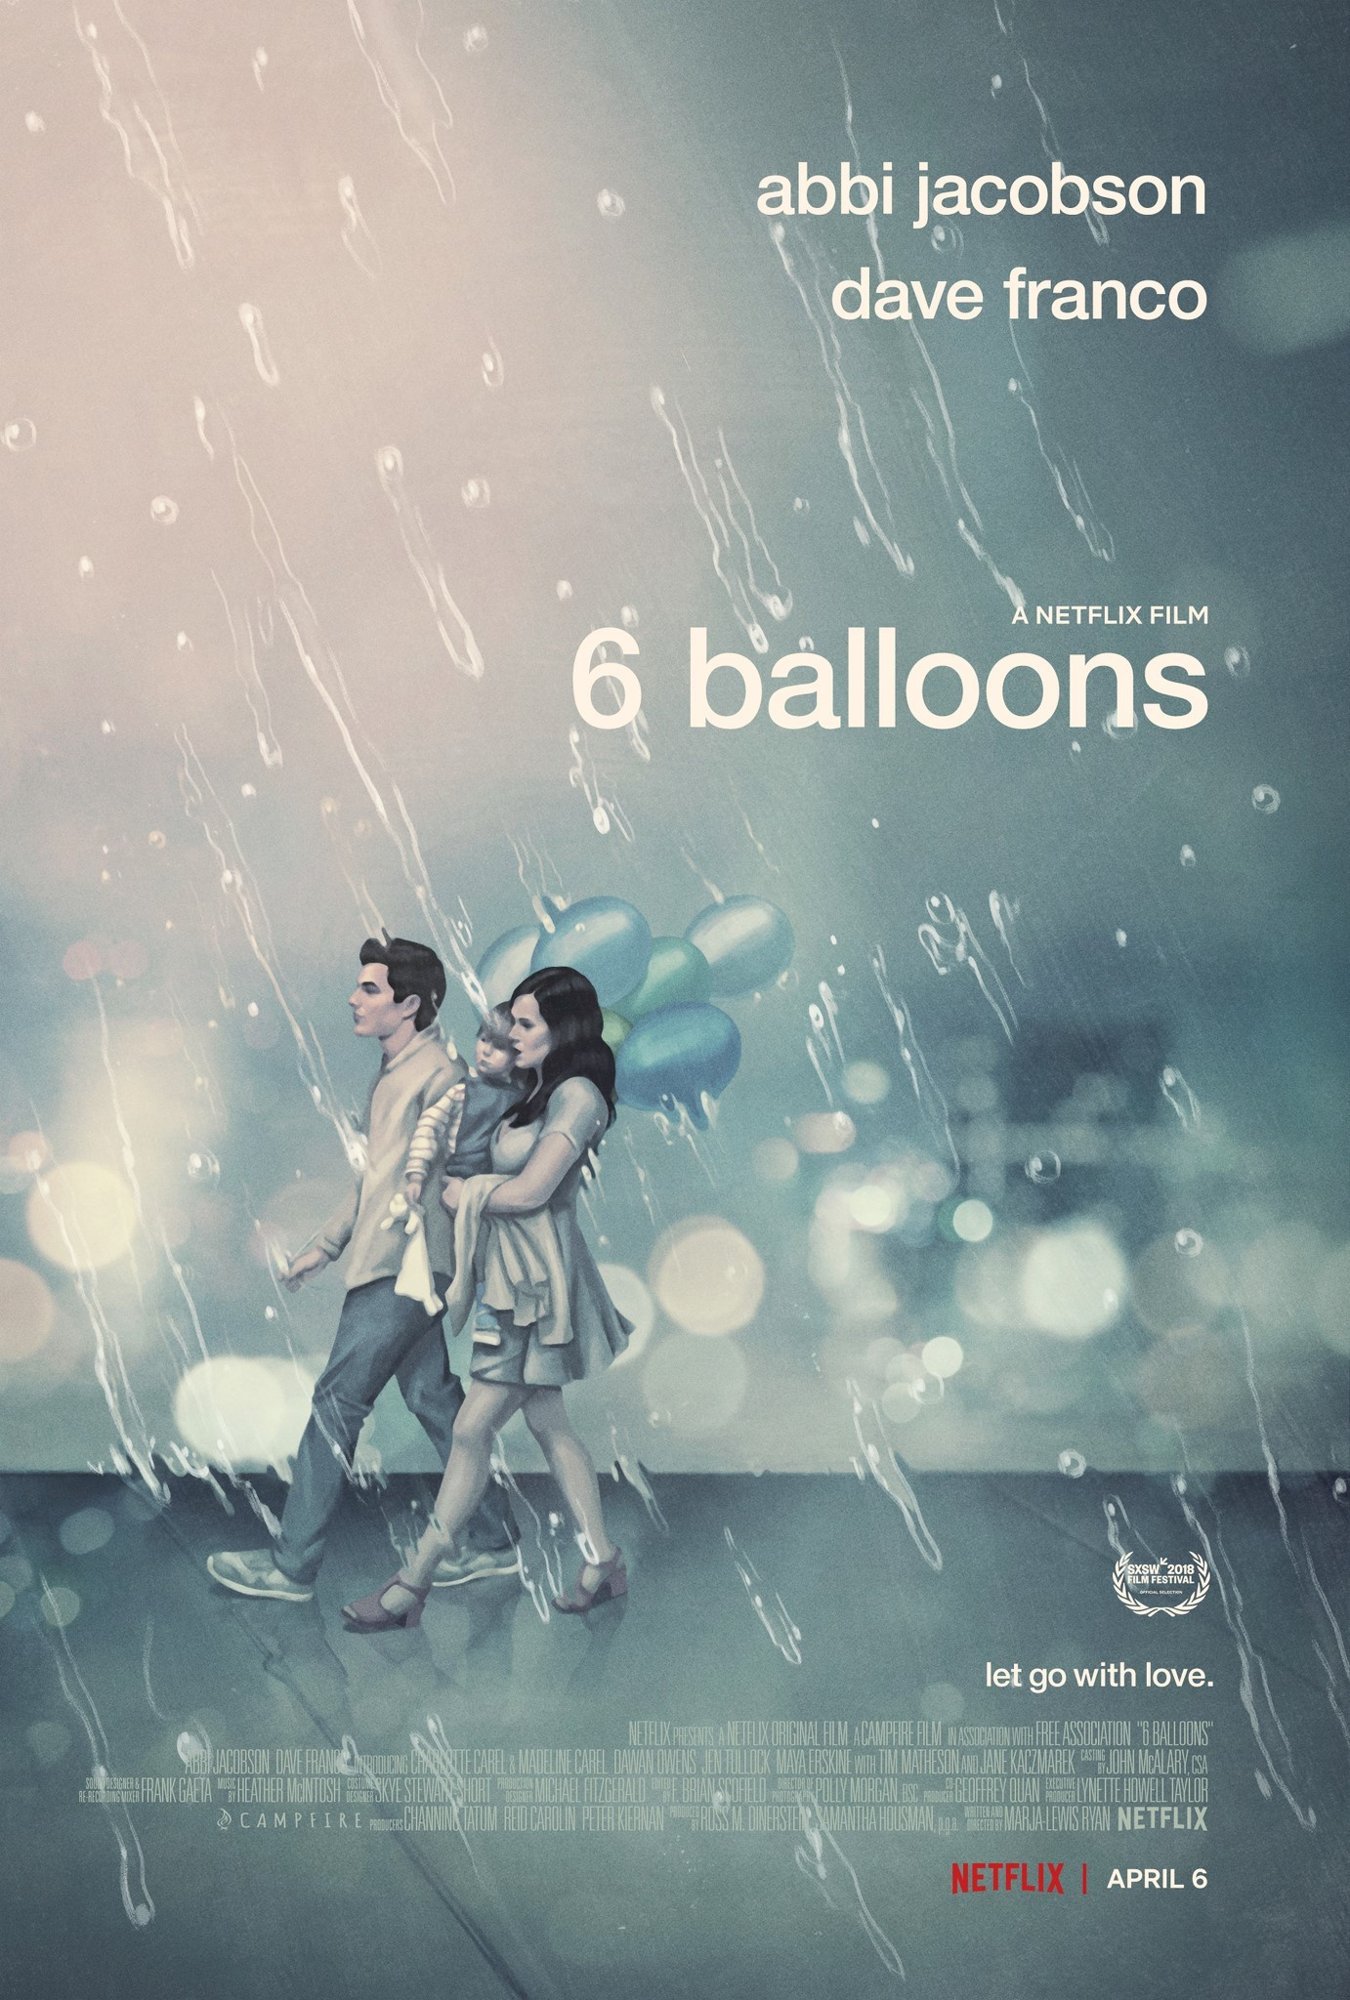 Poster of Netflix's 6 Balloons (2018)